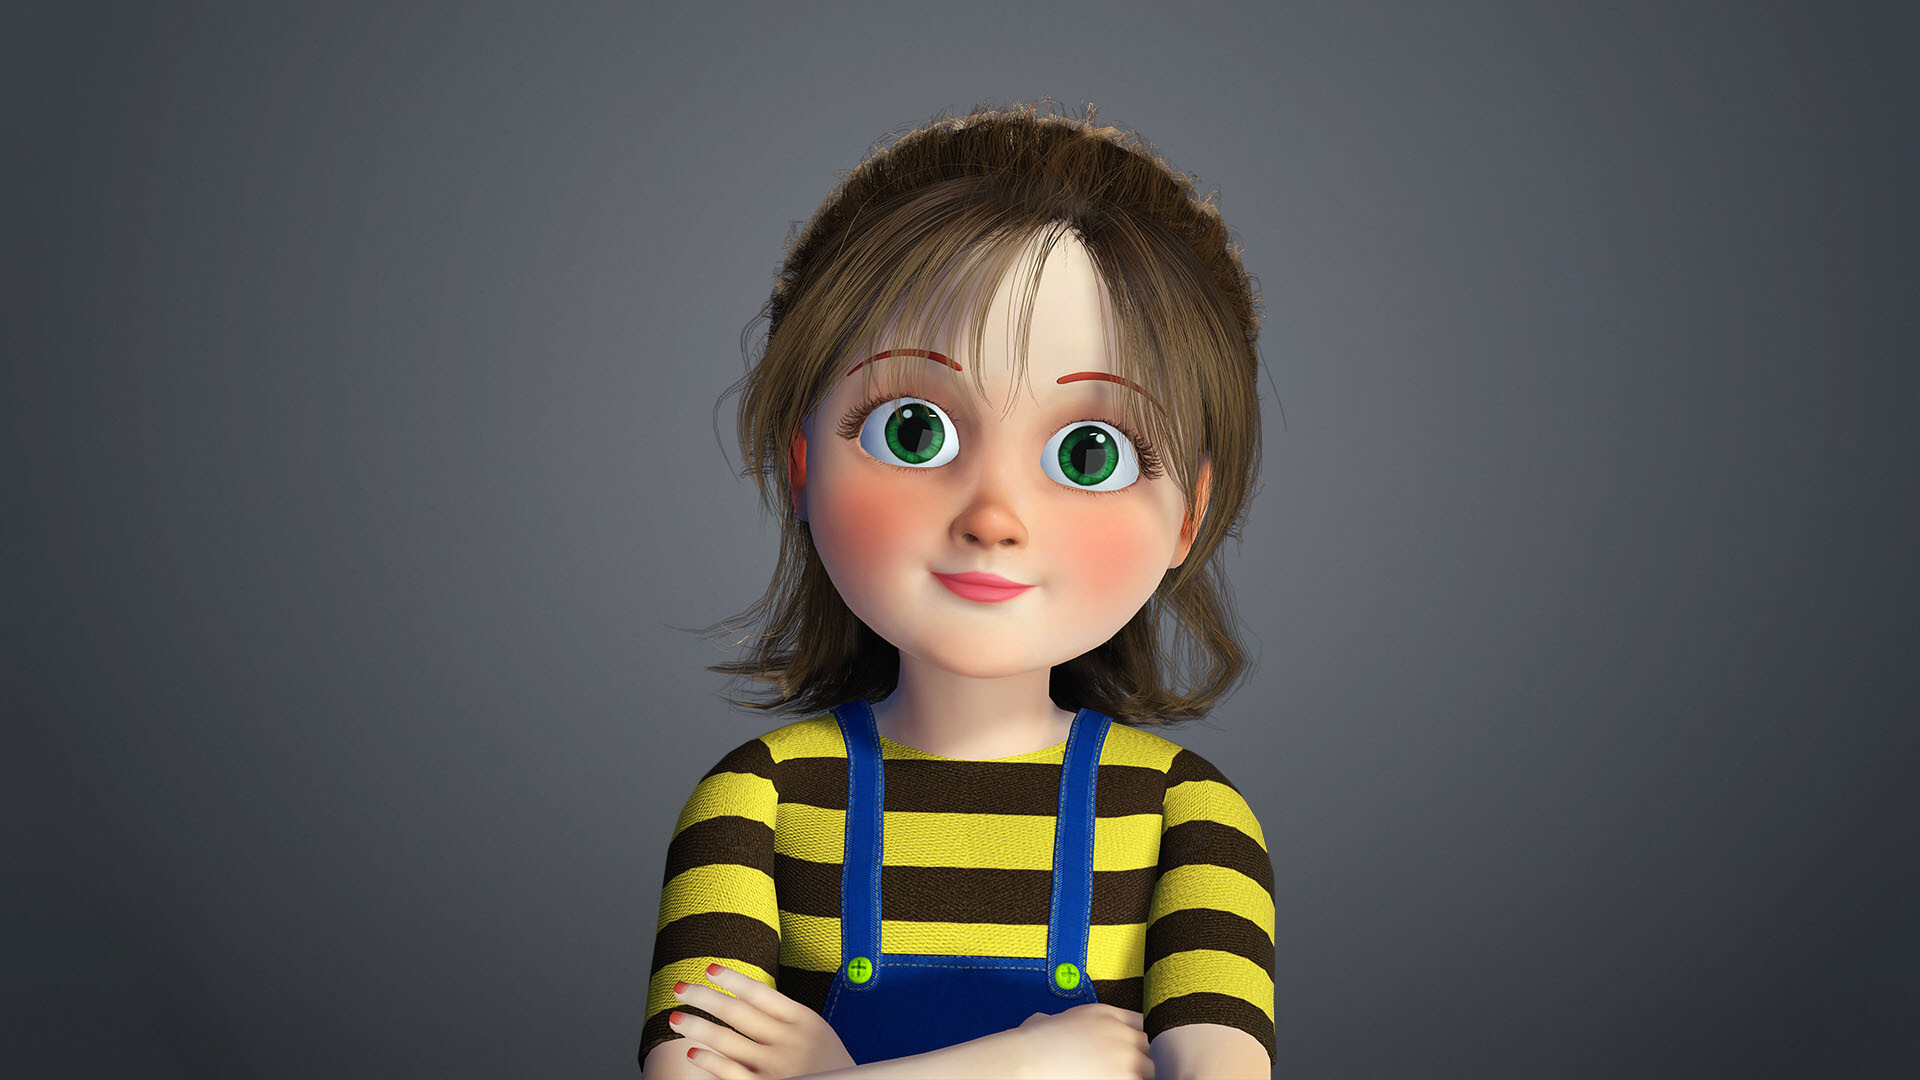 ArtStation - 3D Cartoon Girl Stylish Character with Full Rigged Model